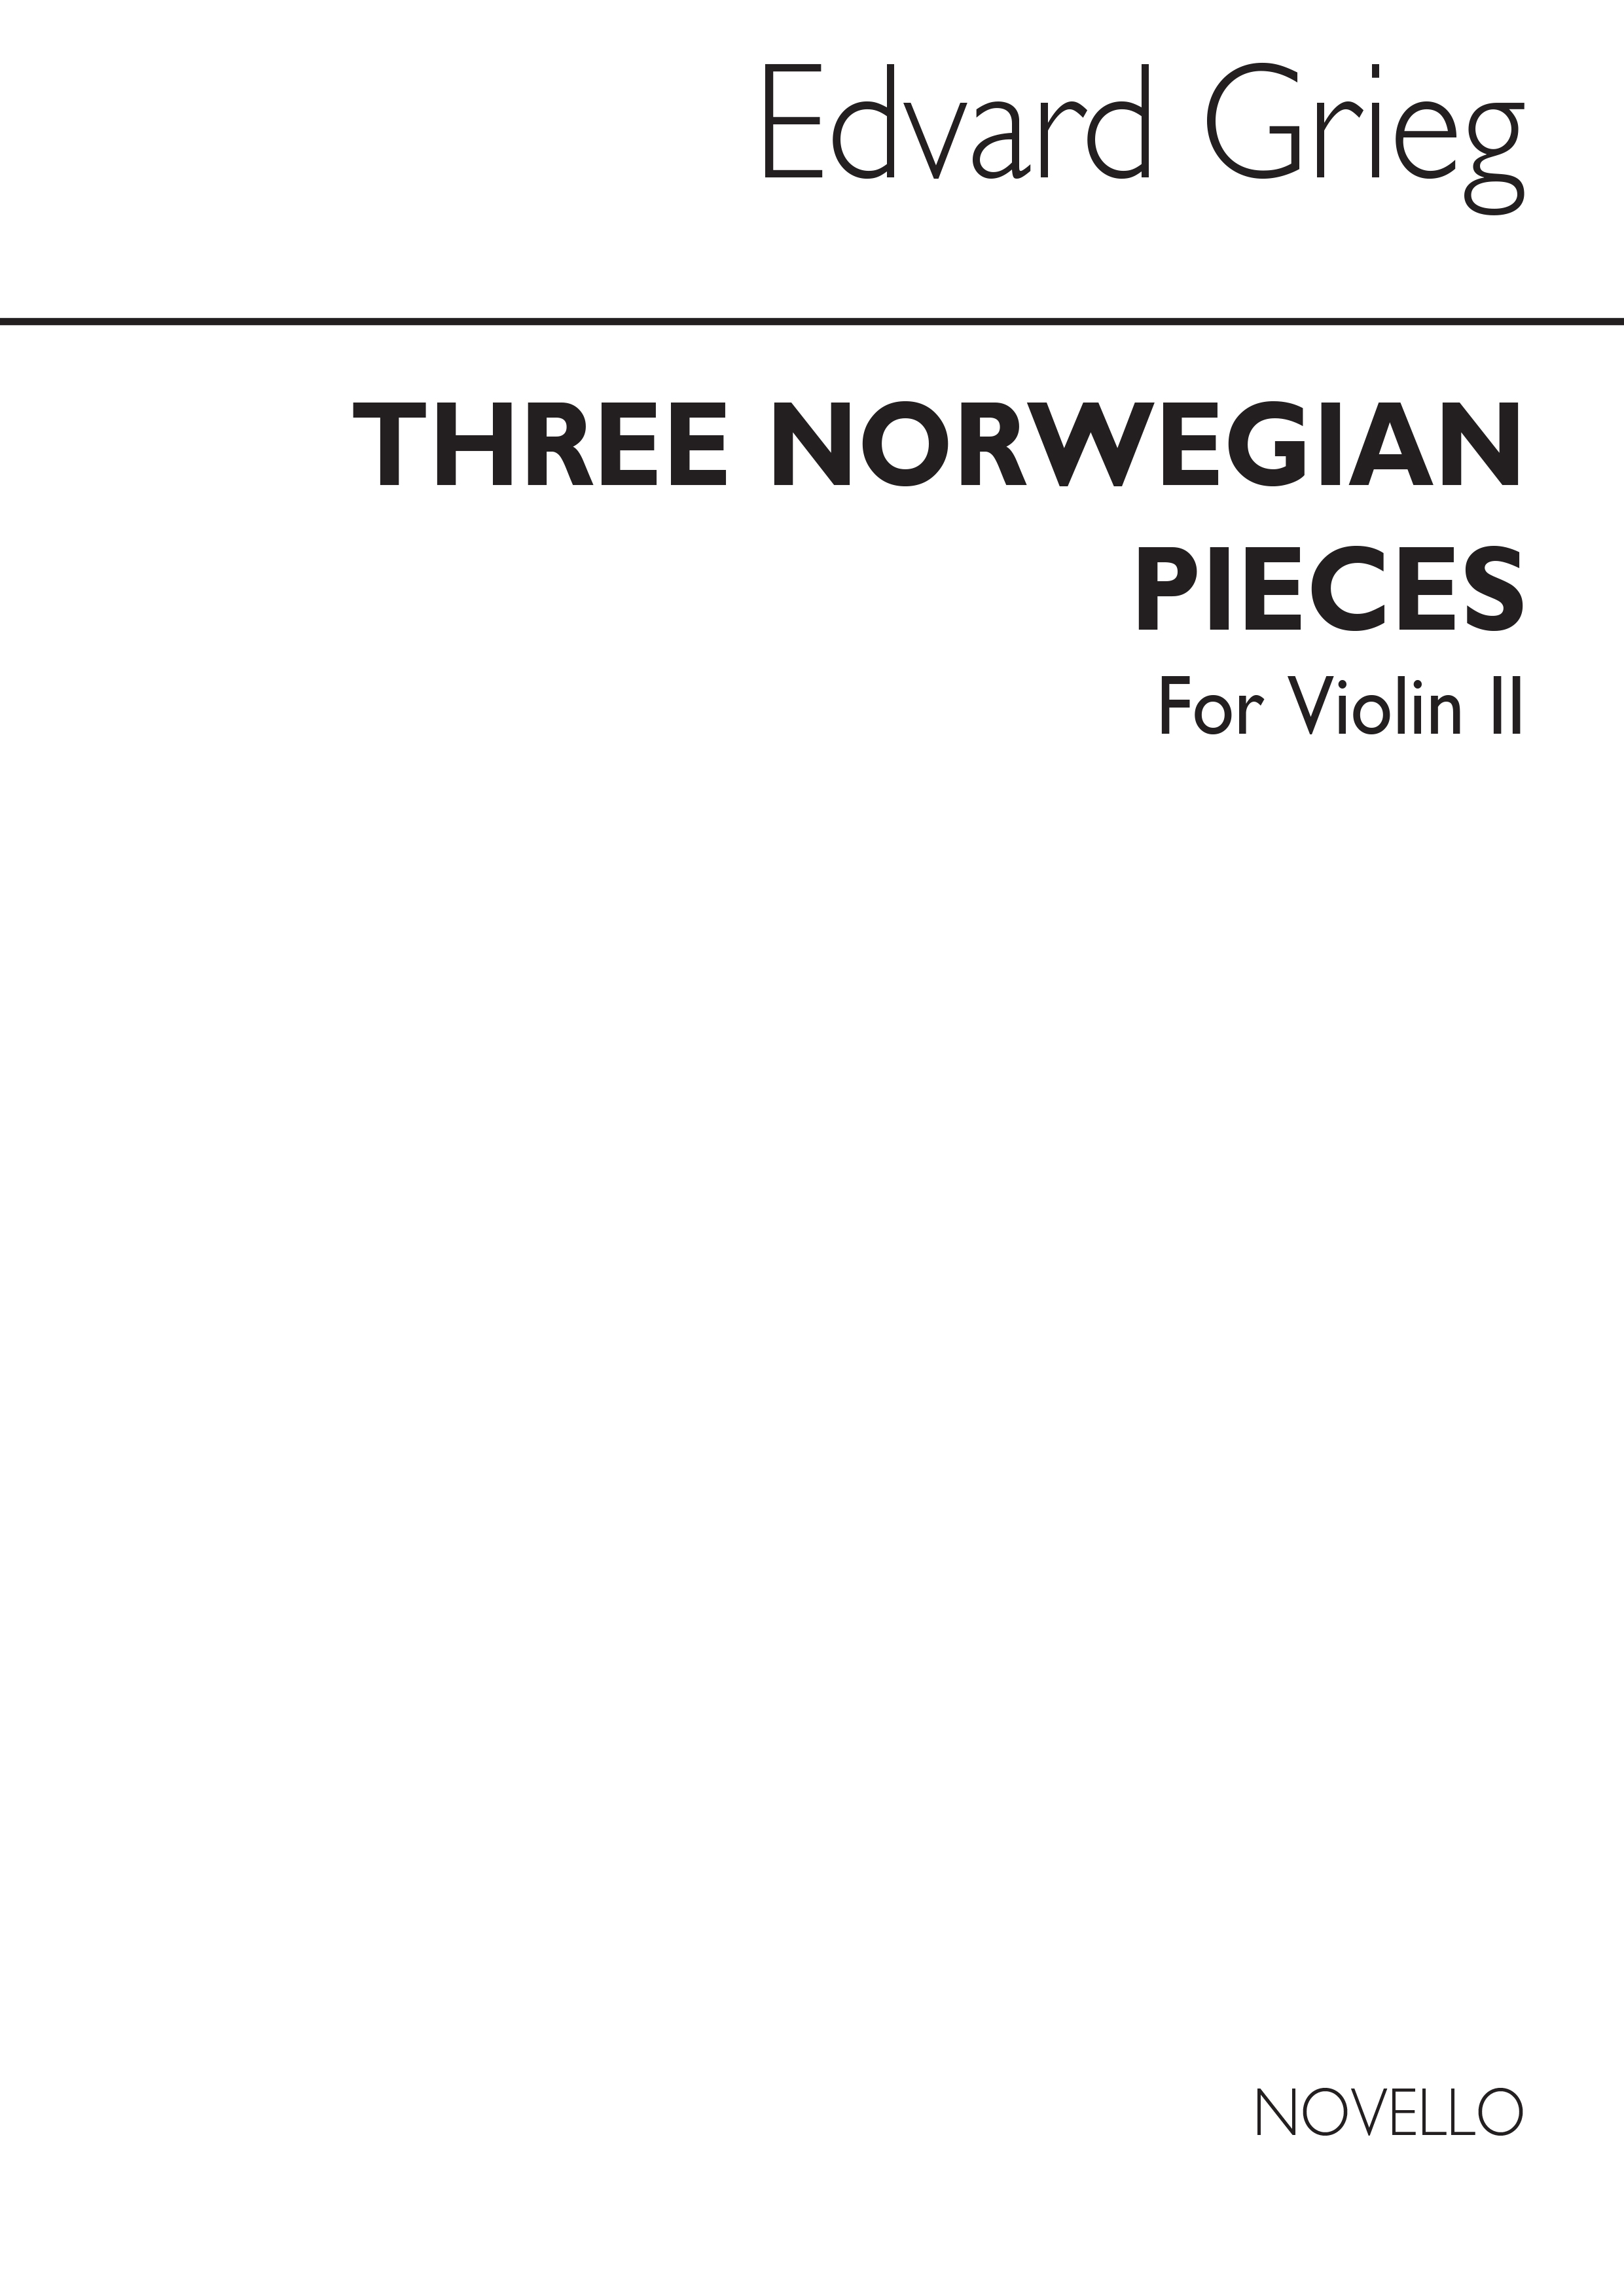 Edvard Grieg: Three Norwegian Pieces (Violin 2)